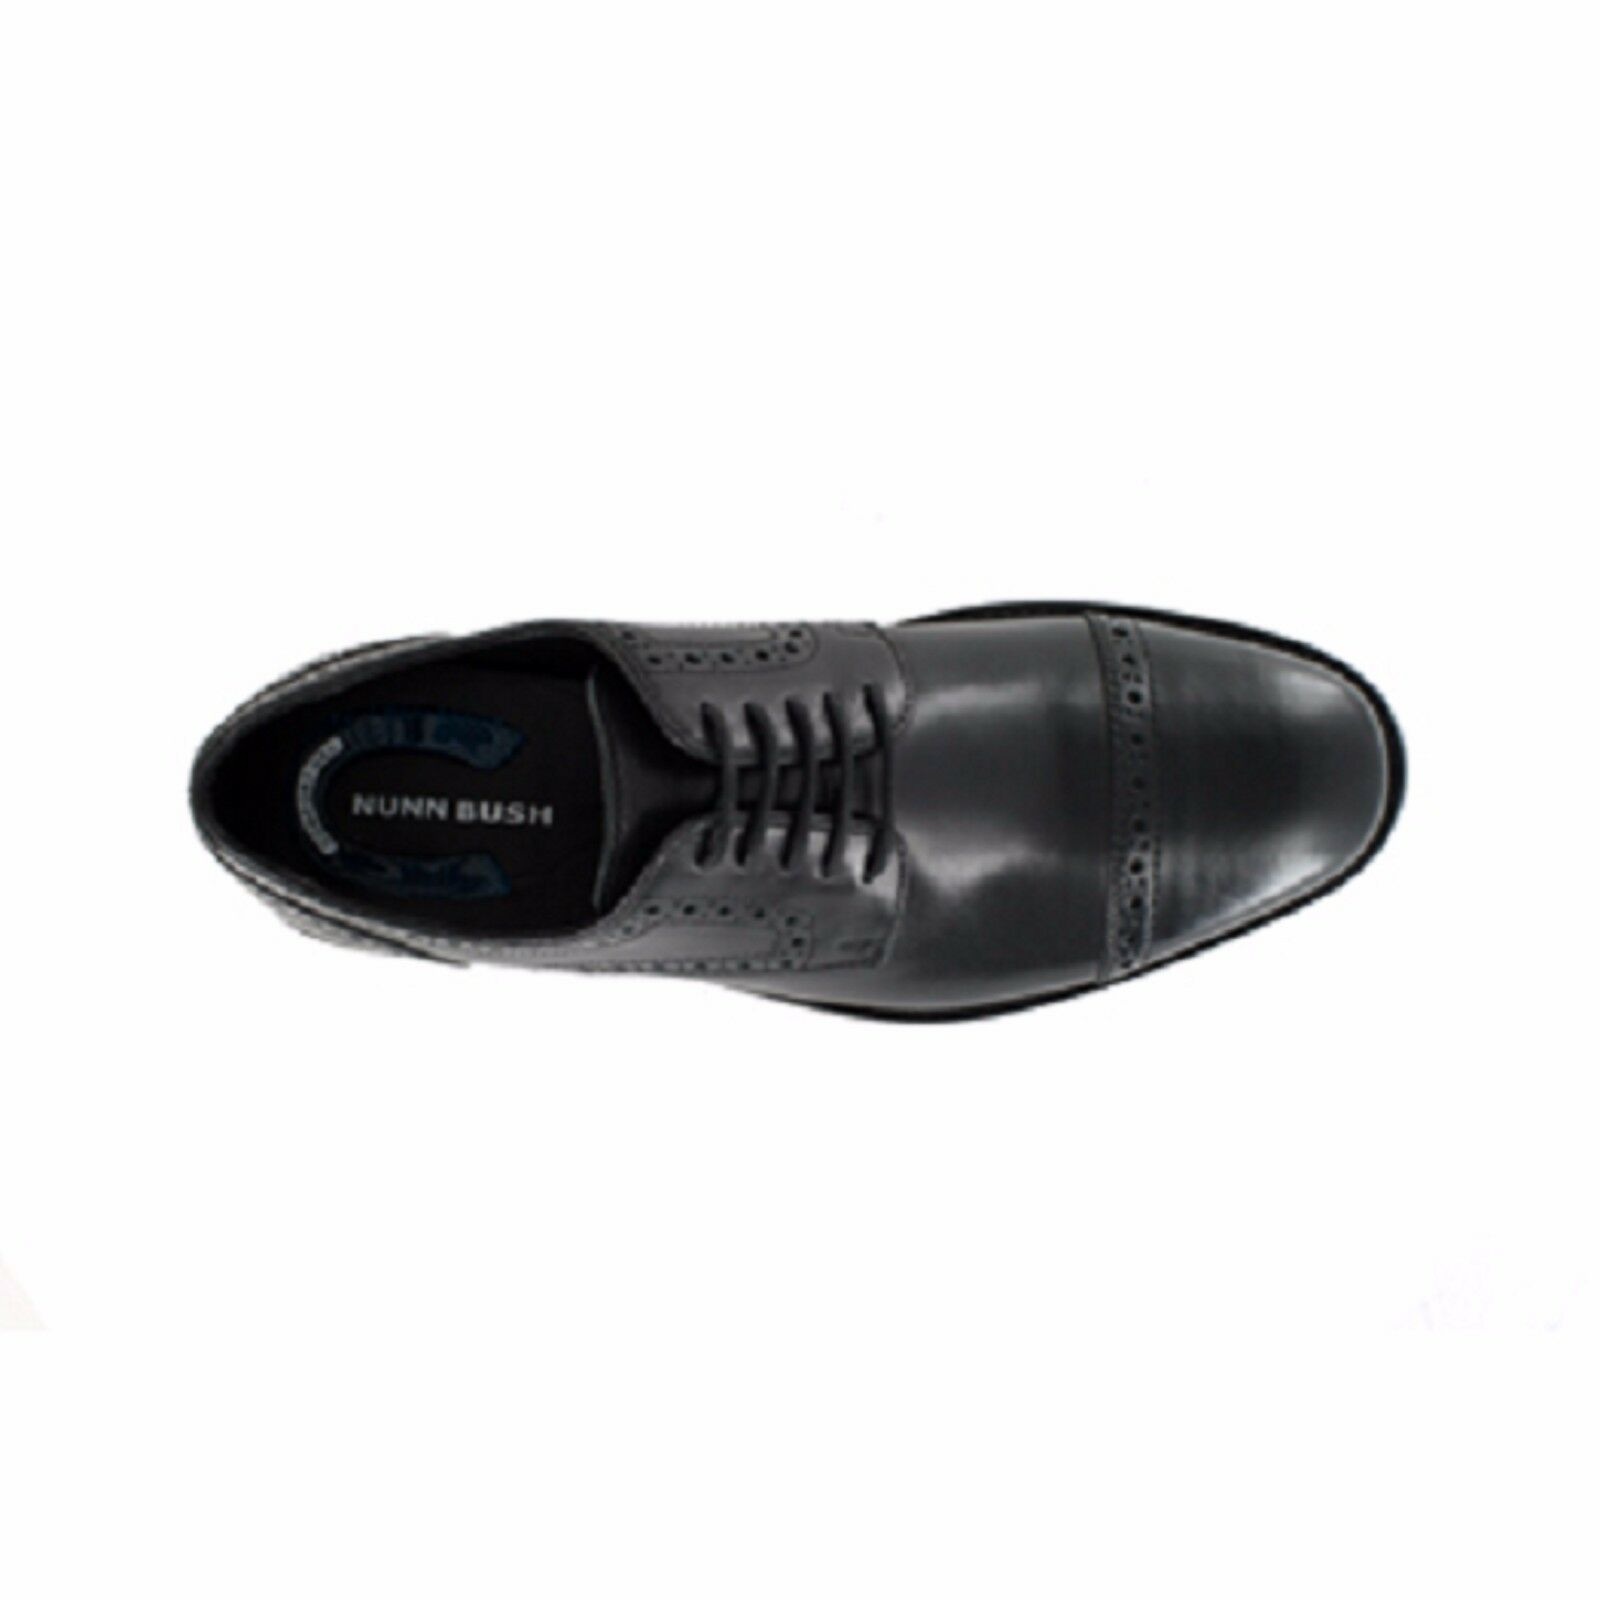 Nunn Bush Men Shoes Norcross Black Leather Lightweight Cap Toe Formal 84526-001 - image 5 of 7